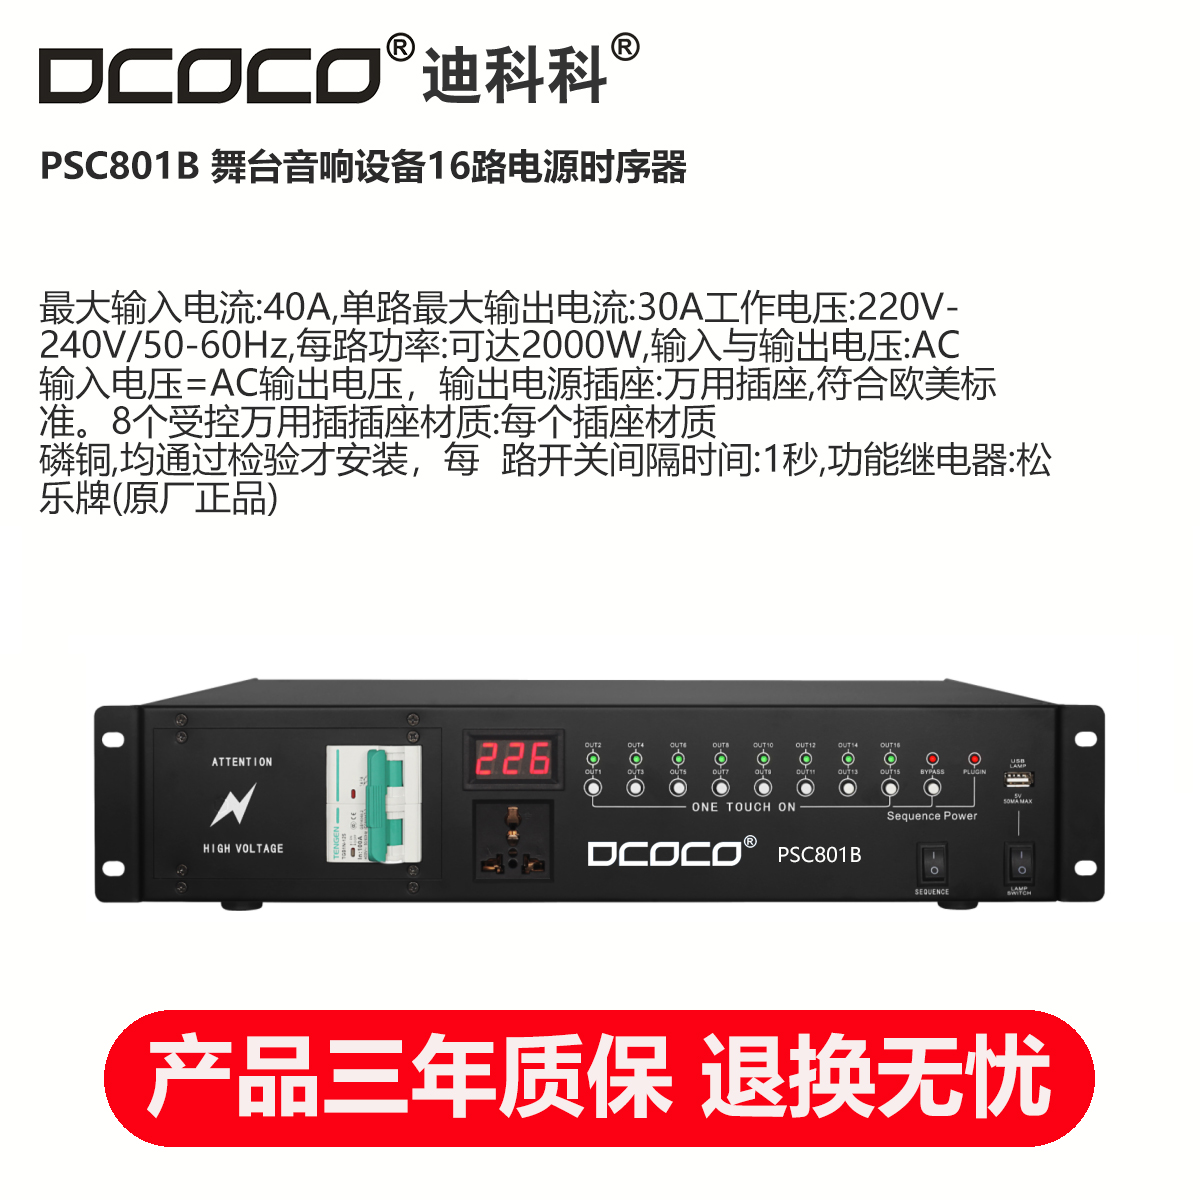 DCOCO 迪科科 PSC801B 舞台会议音响功放设备16路受控电源时序器